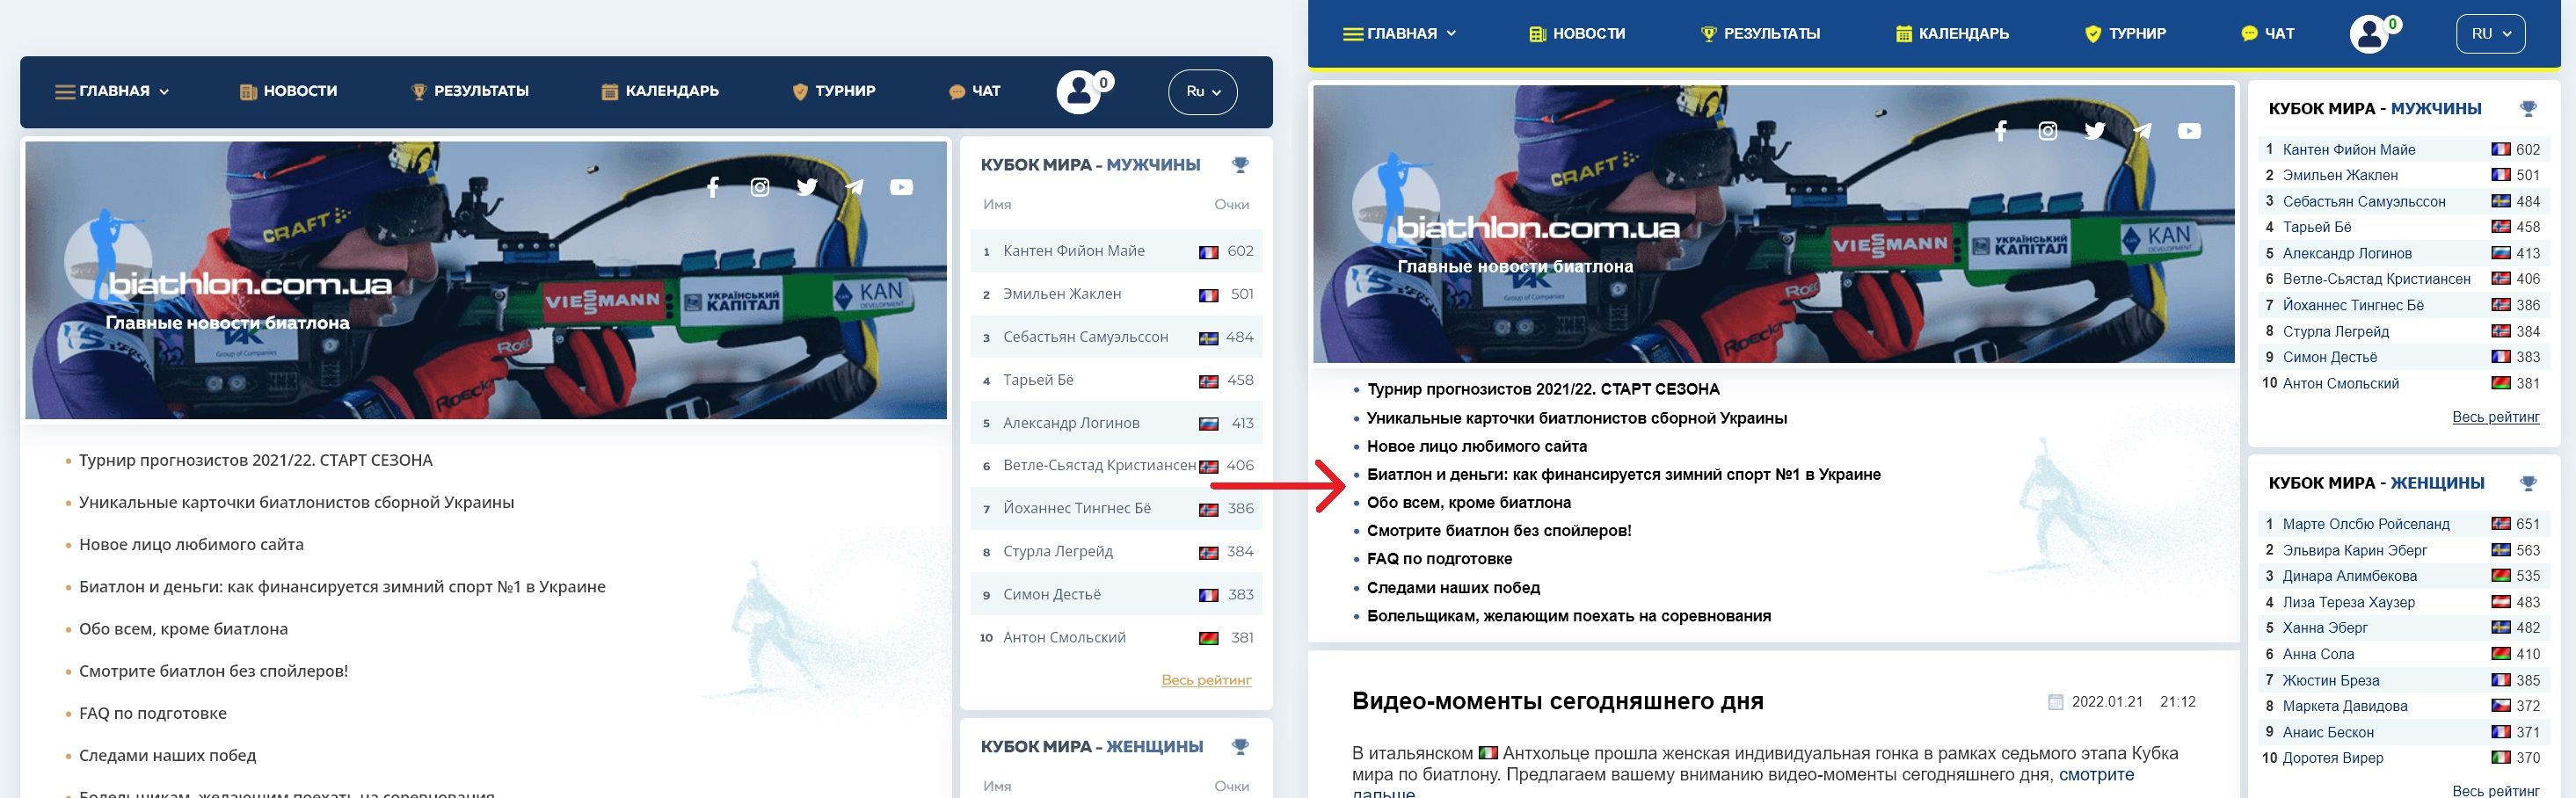 Screenshot of Biathlon.com.ua